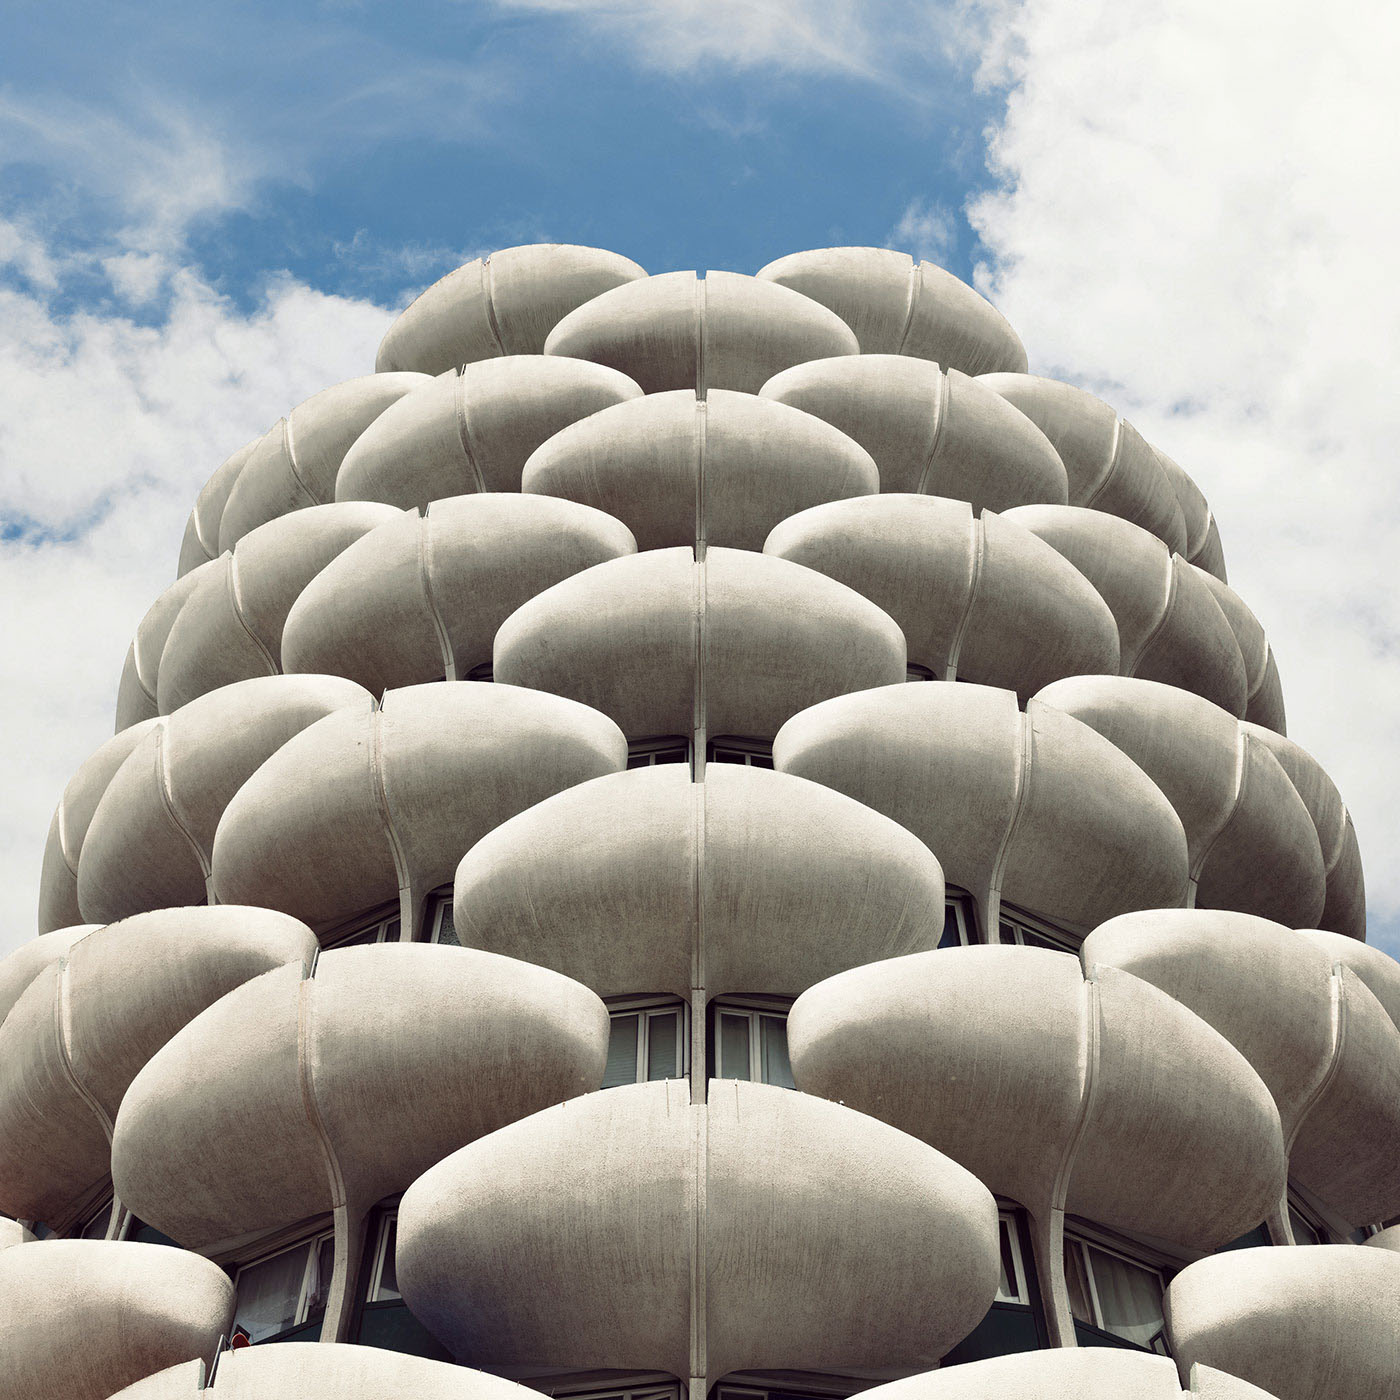 modern architecture contemporary architecture city building design inspire concrete architect geometric Paris